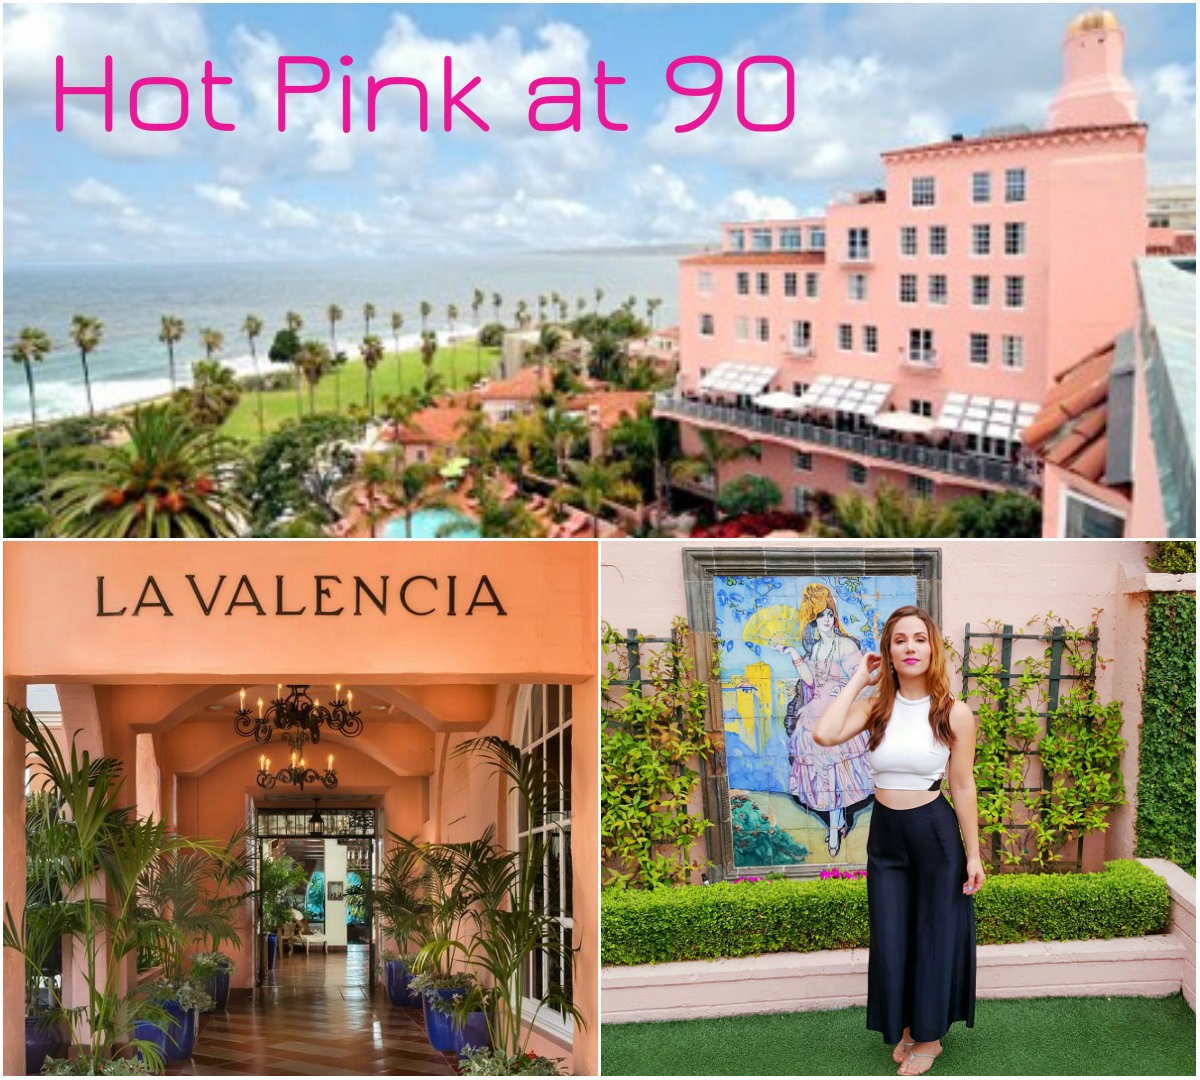 La Valencia Hotel: Hot Pink at 90